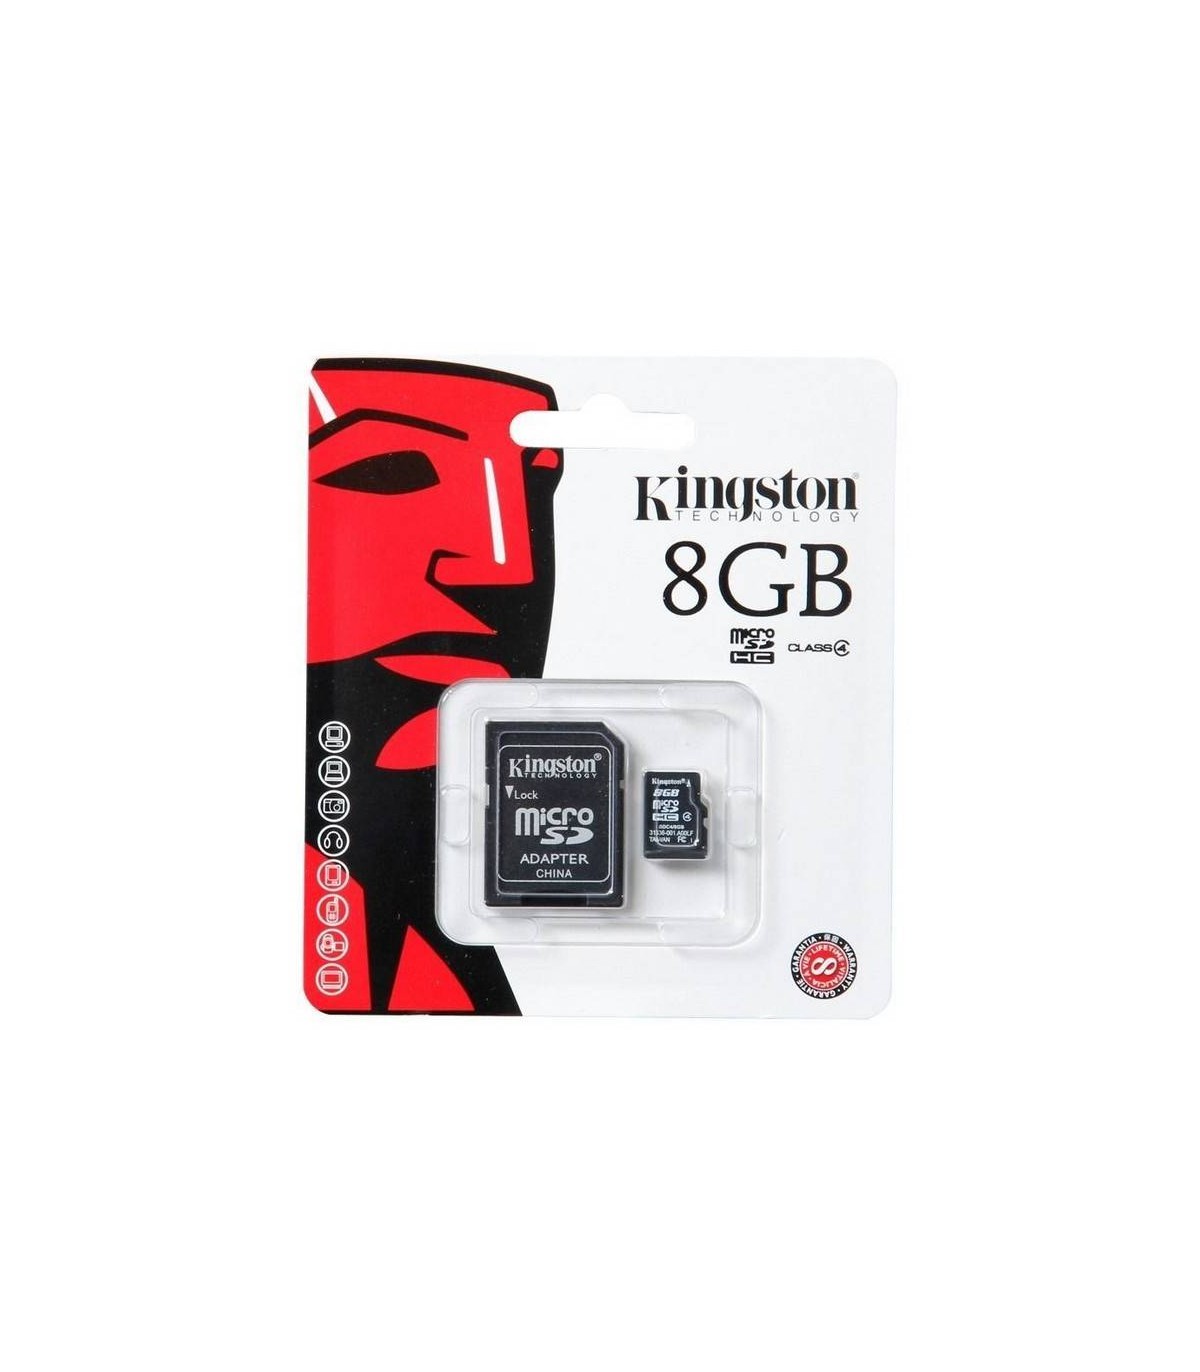 Estrecho de Bering Abrazadera Perforación ✓ Tarjeta de memoria Micro Sd Kingston Original de 8GB.